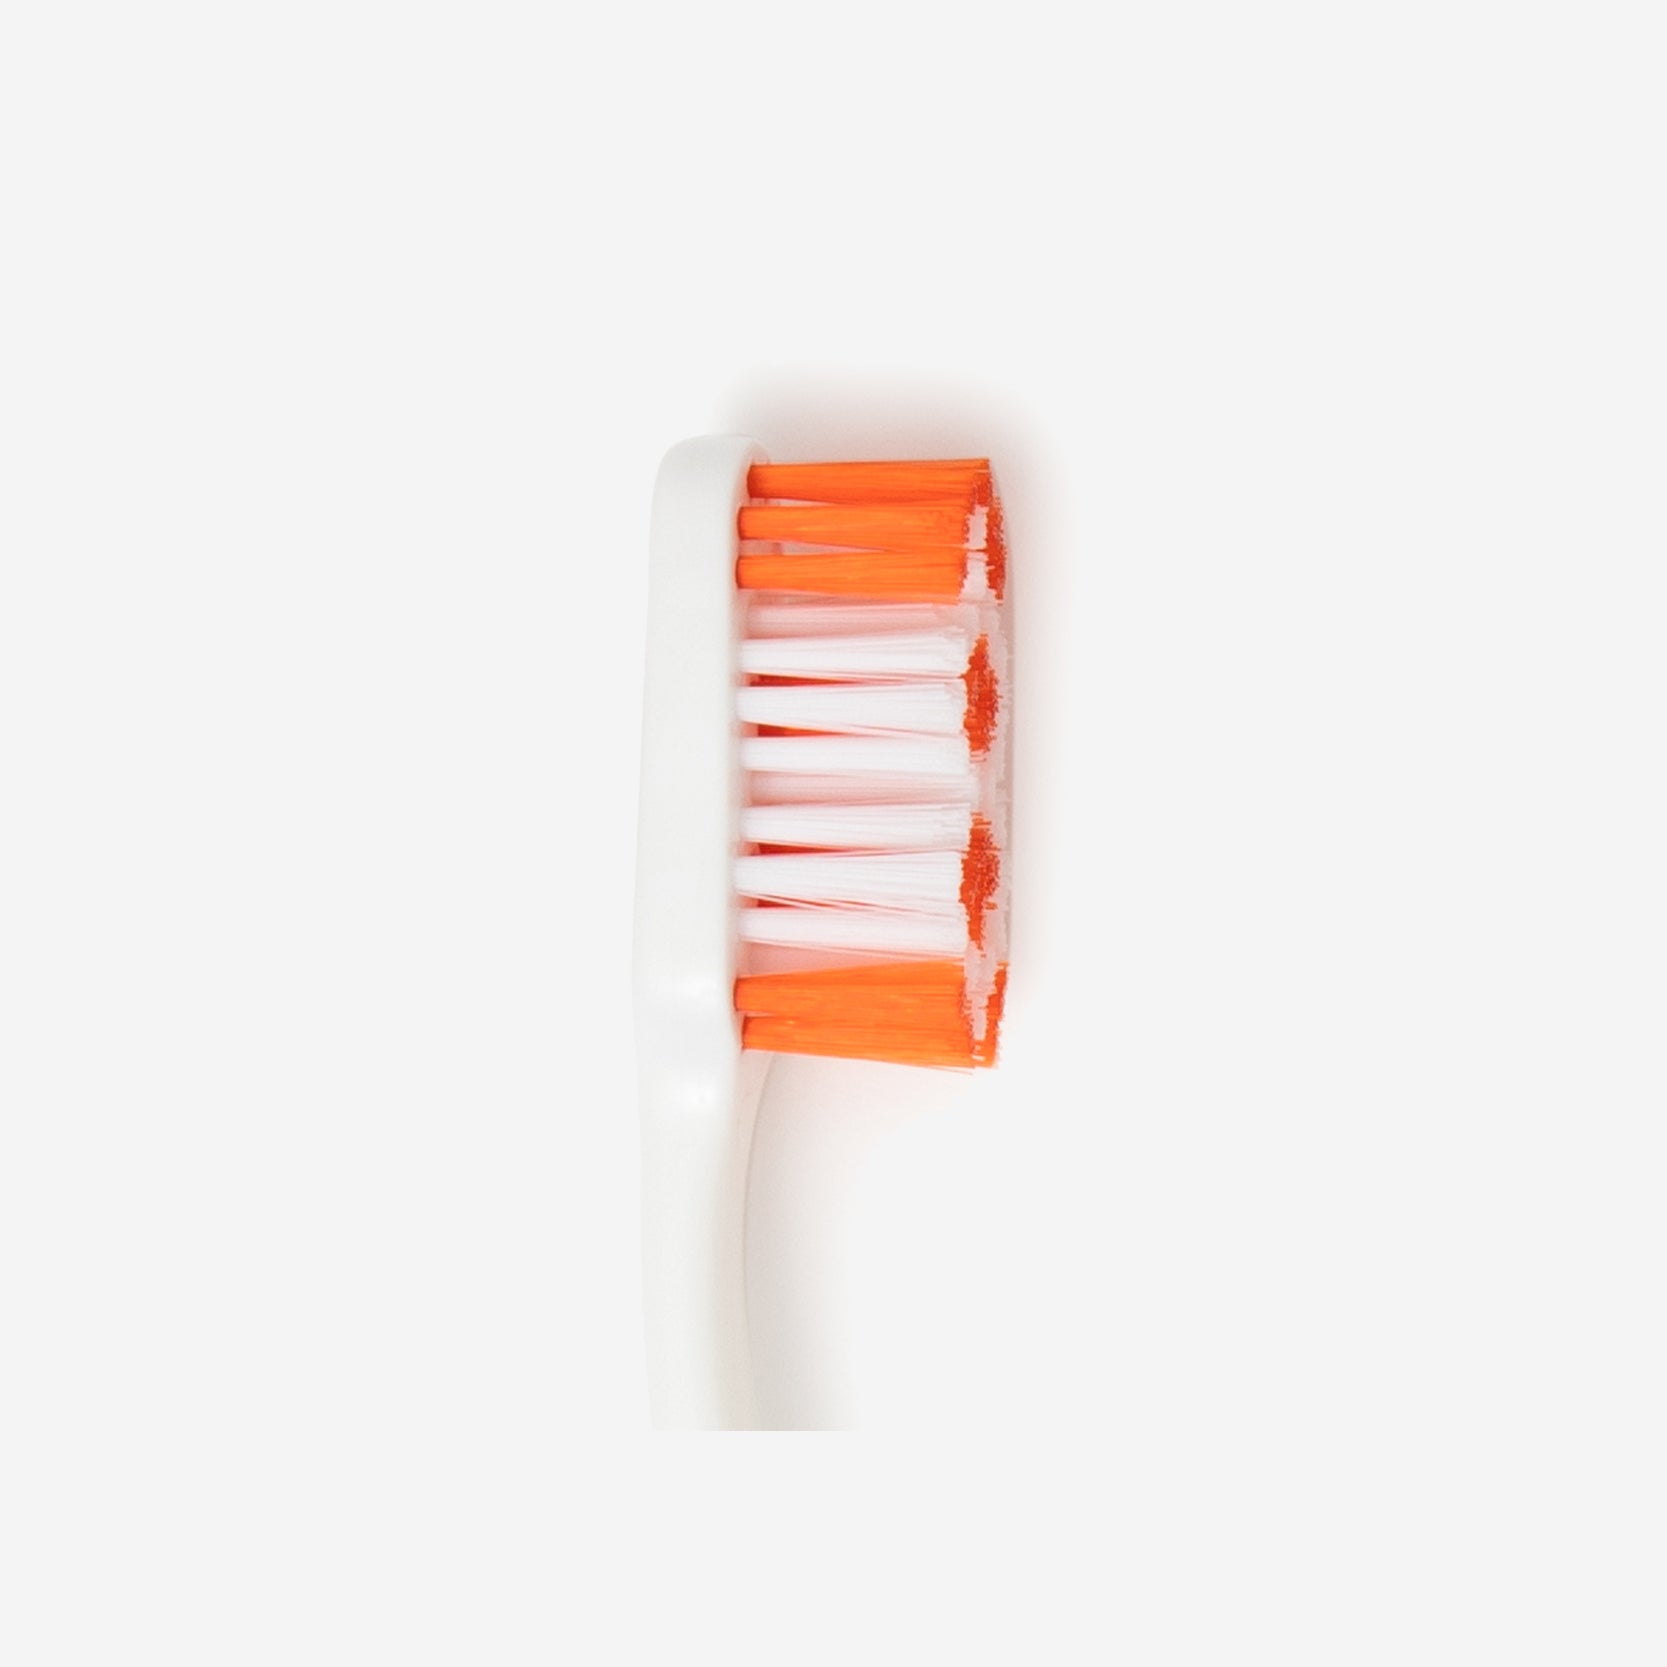 Encompass Toothbrush - Imprinted (144 pc)